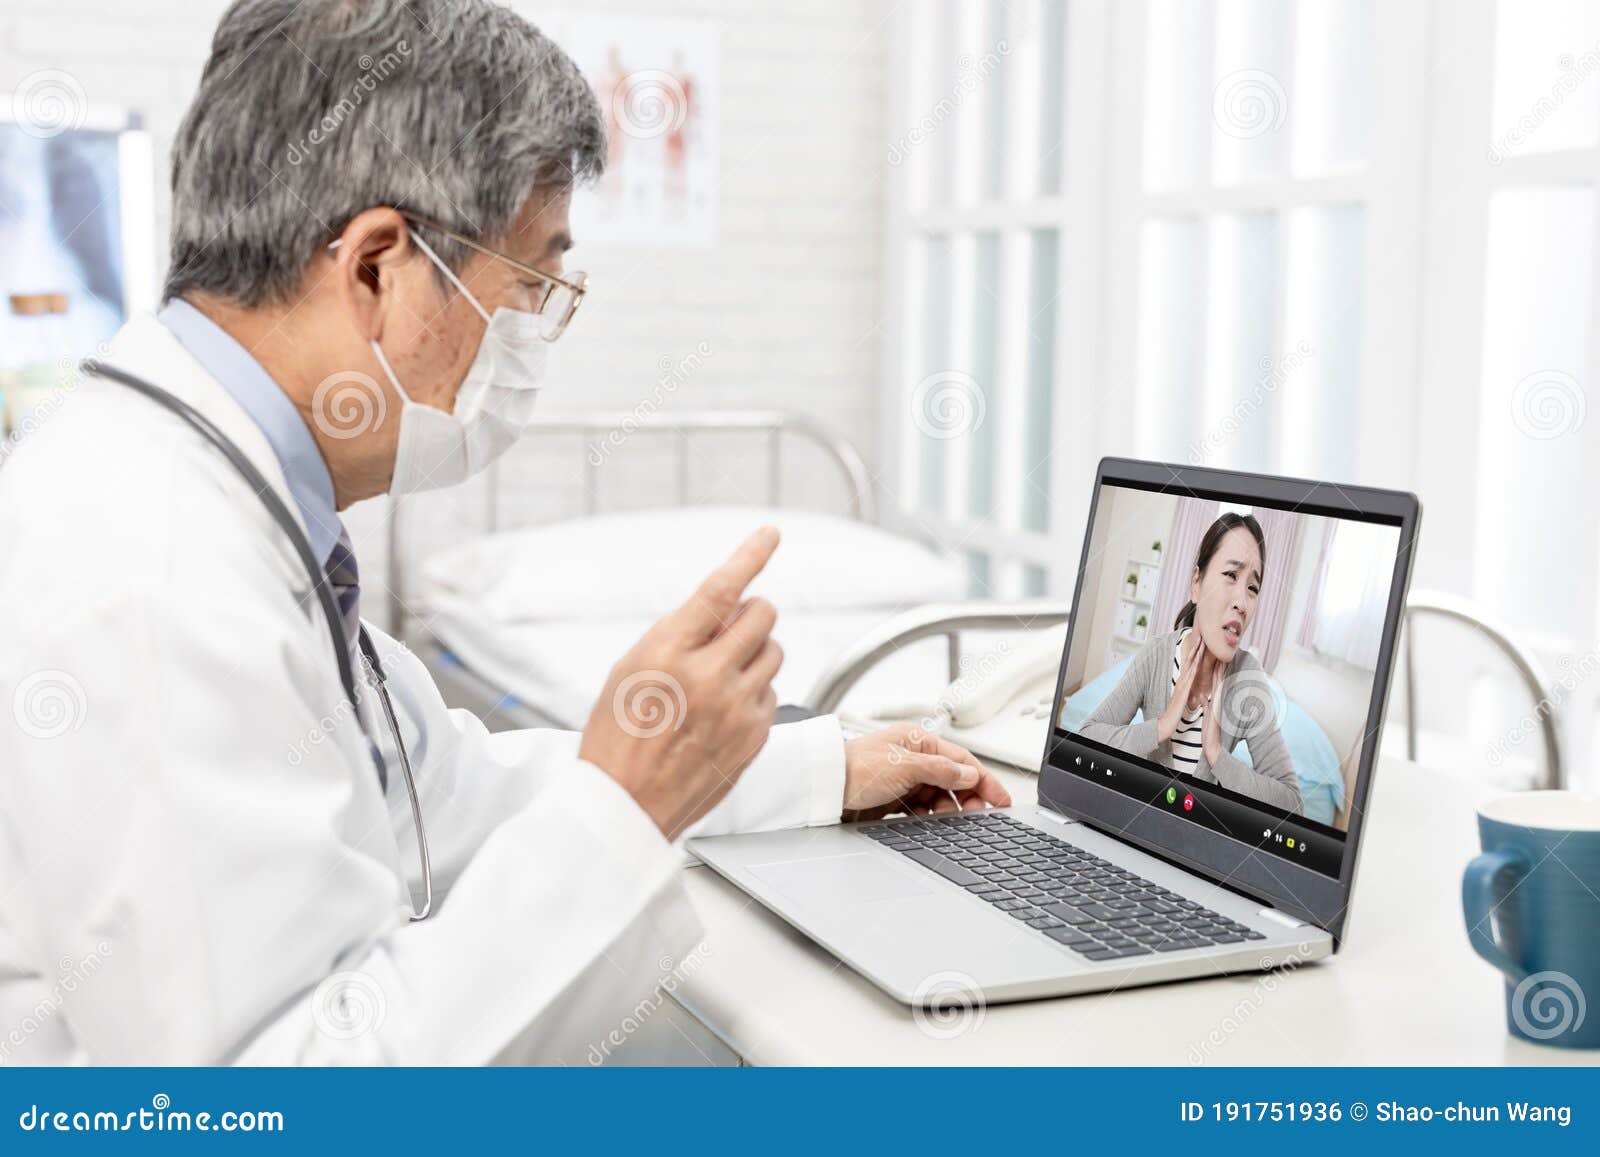 online tele medicine concept